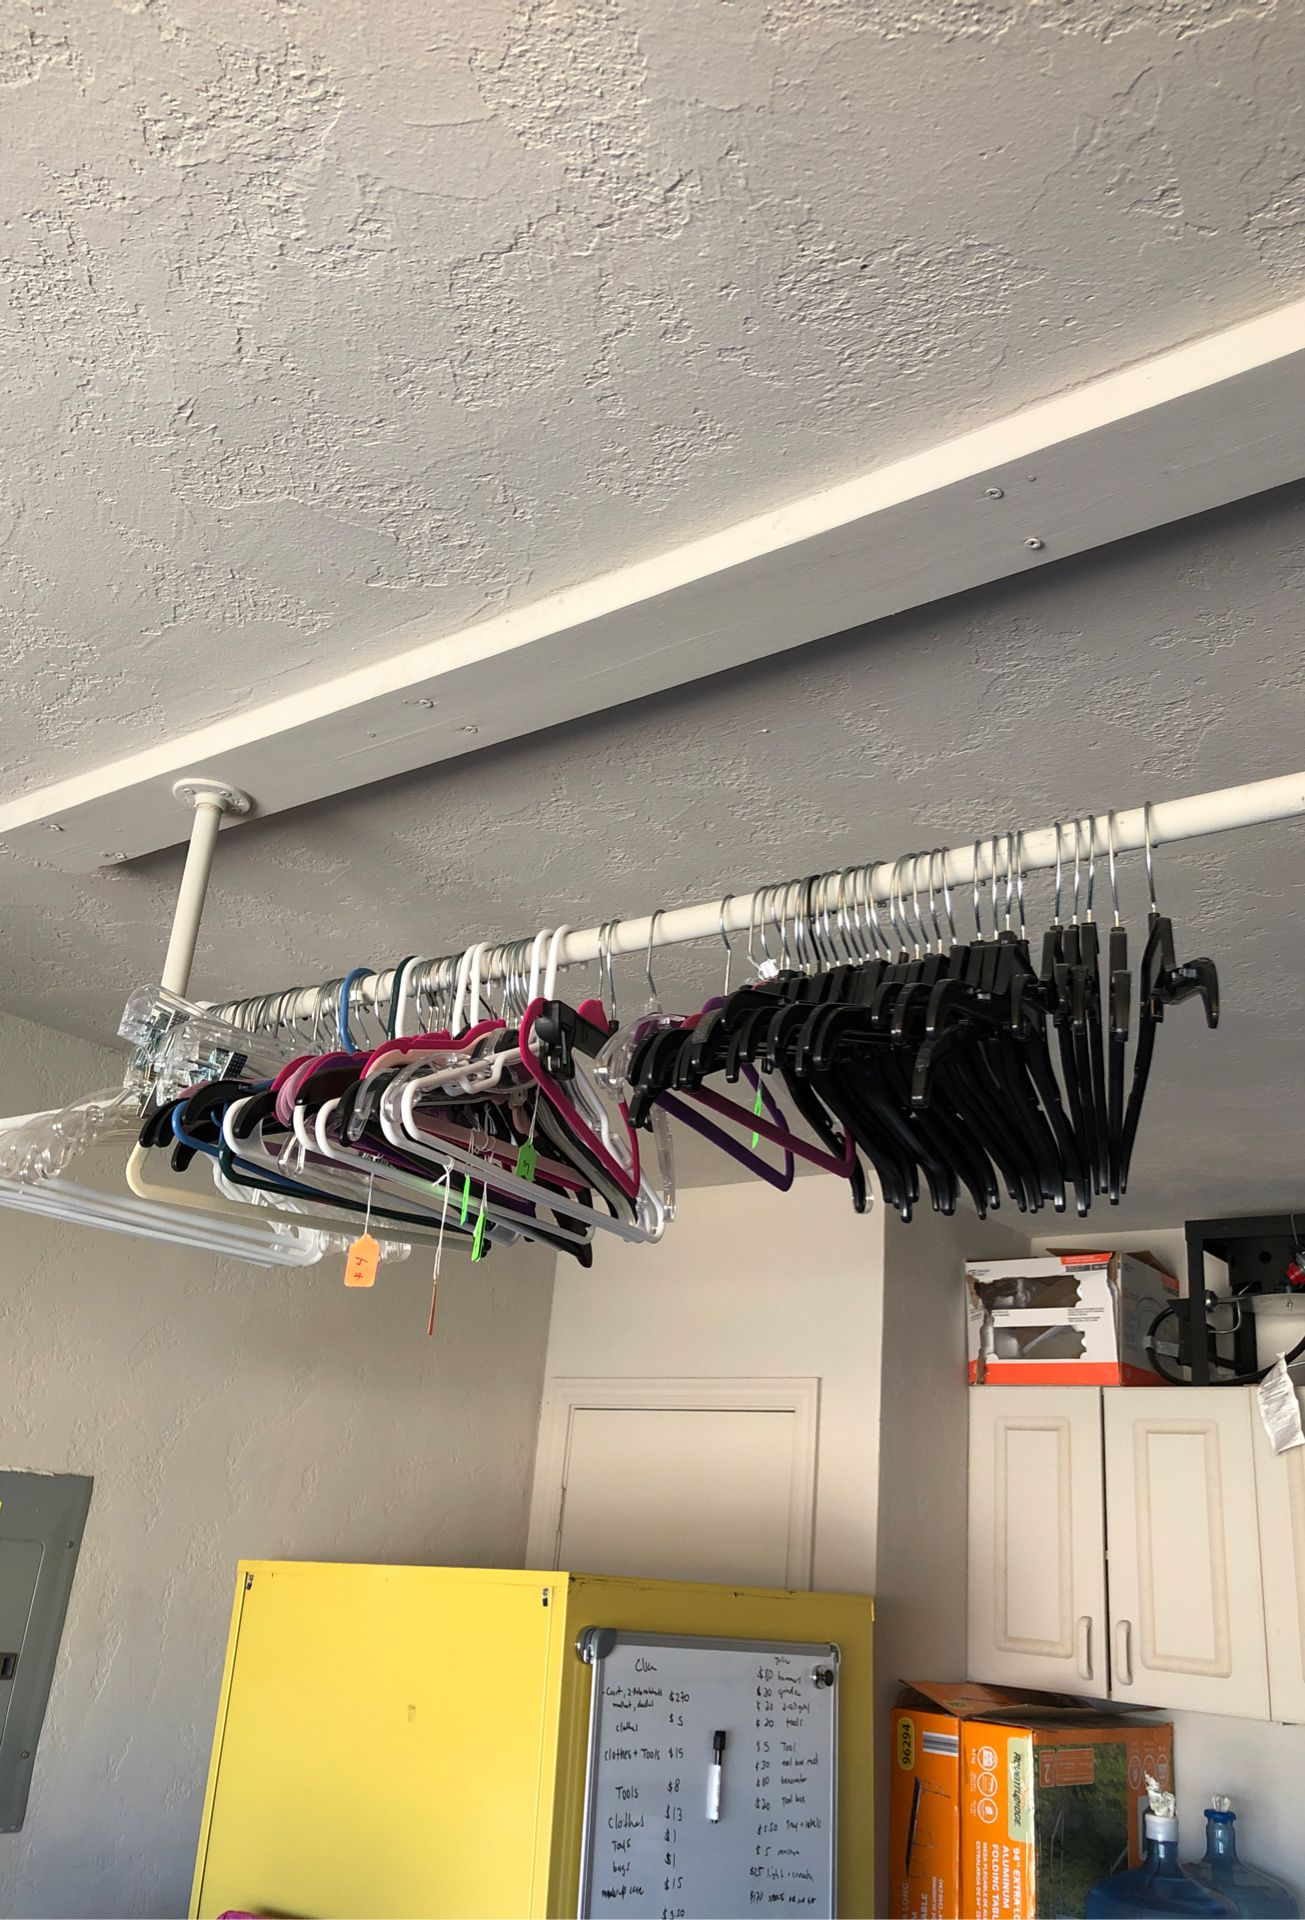 Free hangers